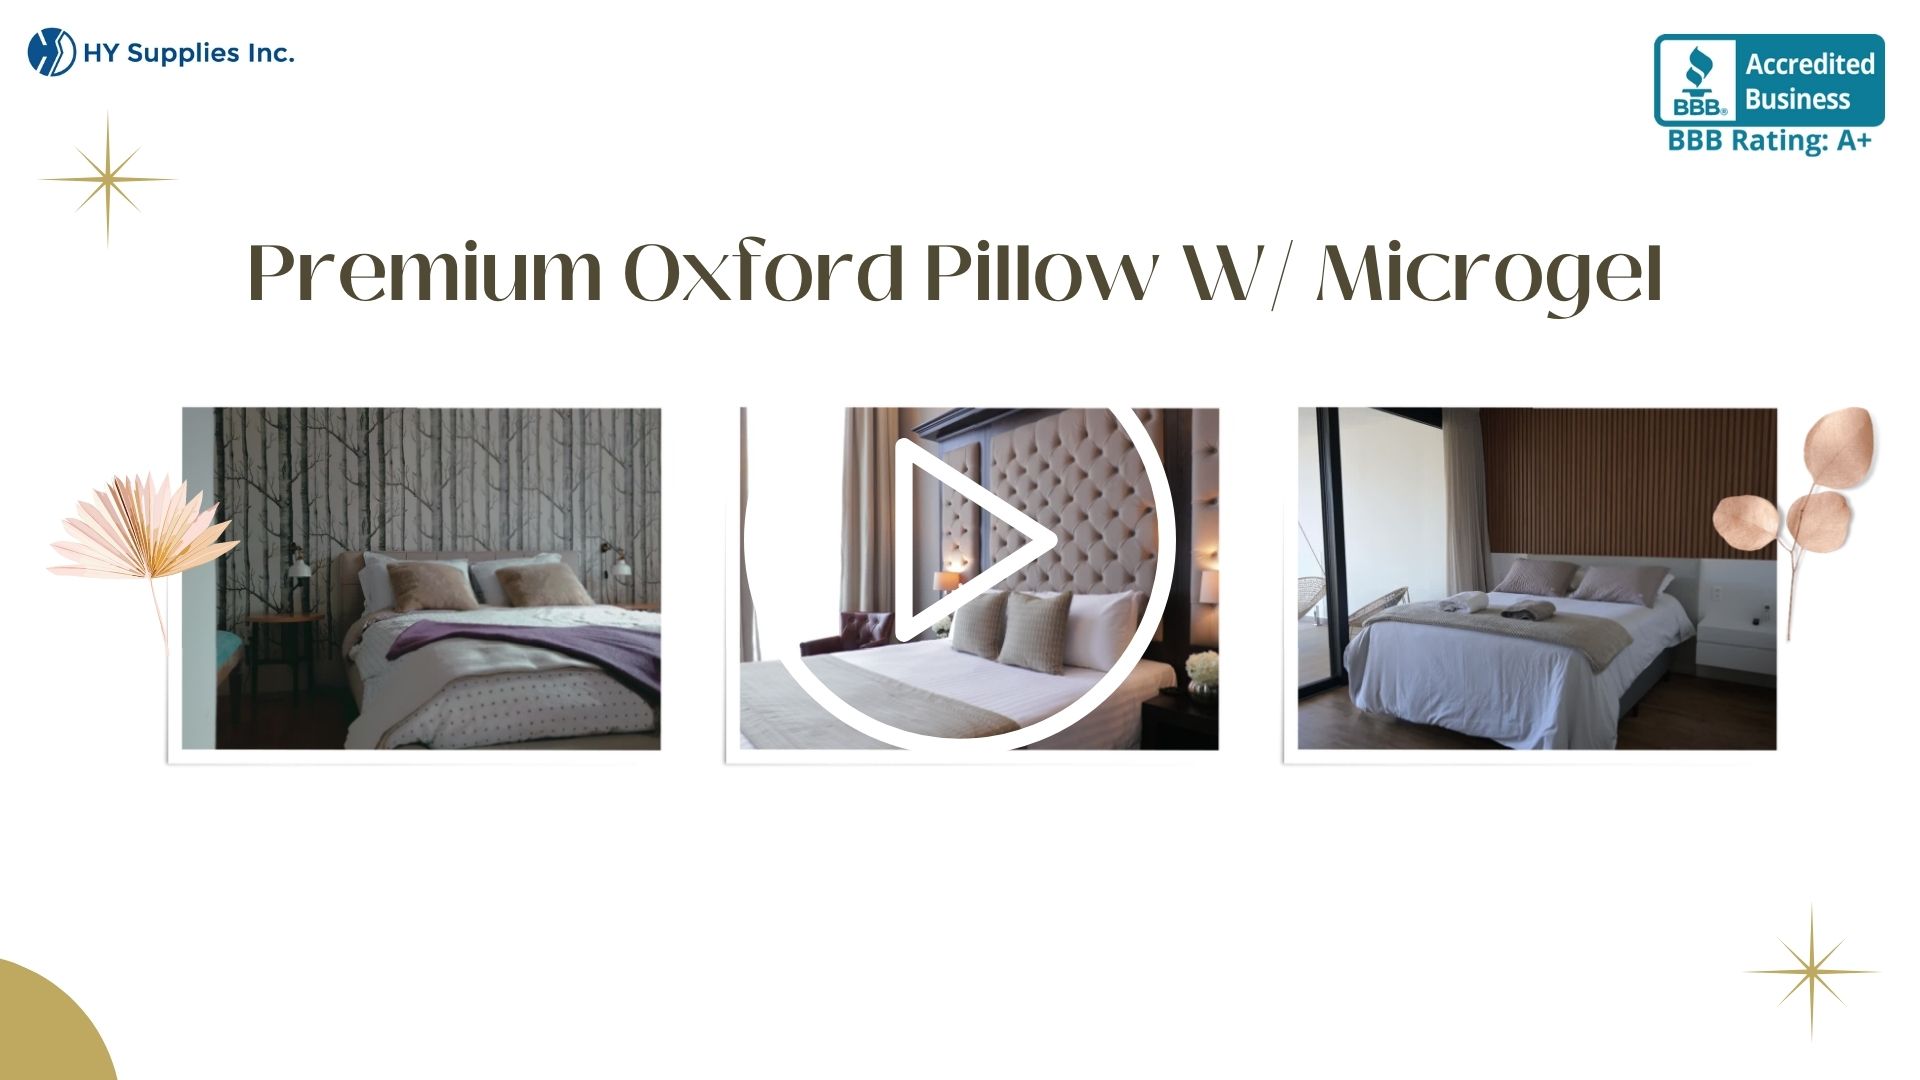 Premium Oxford Pillow W/ Microgel